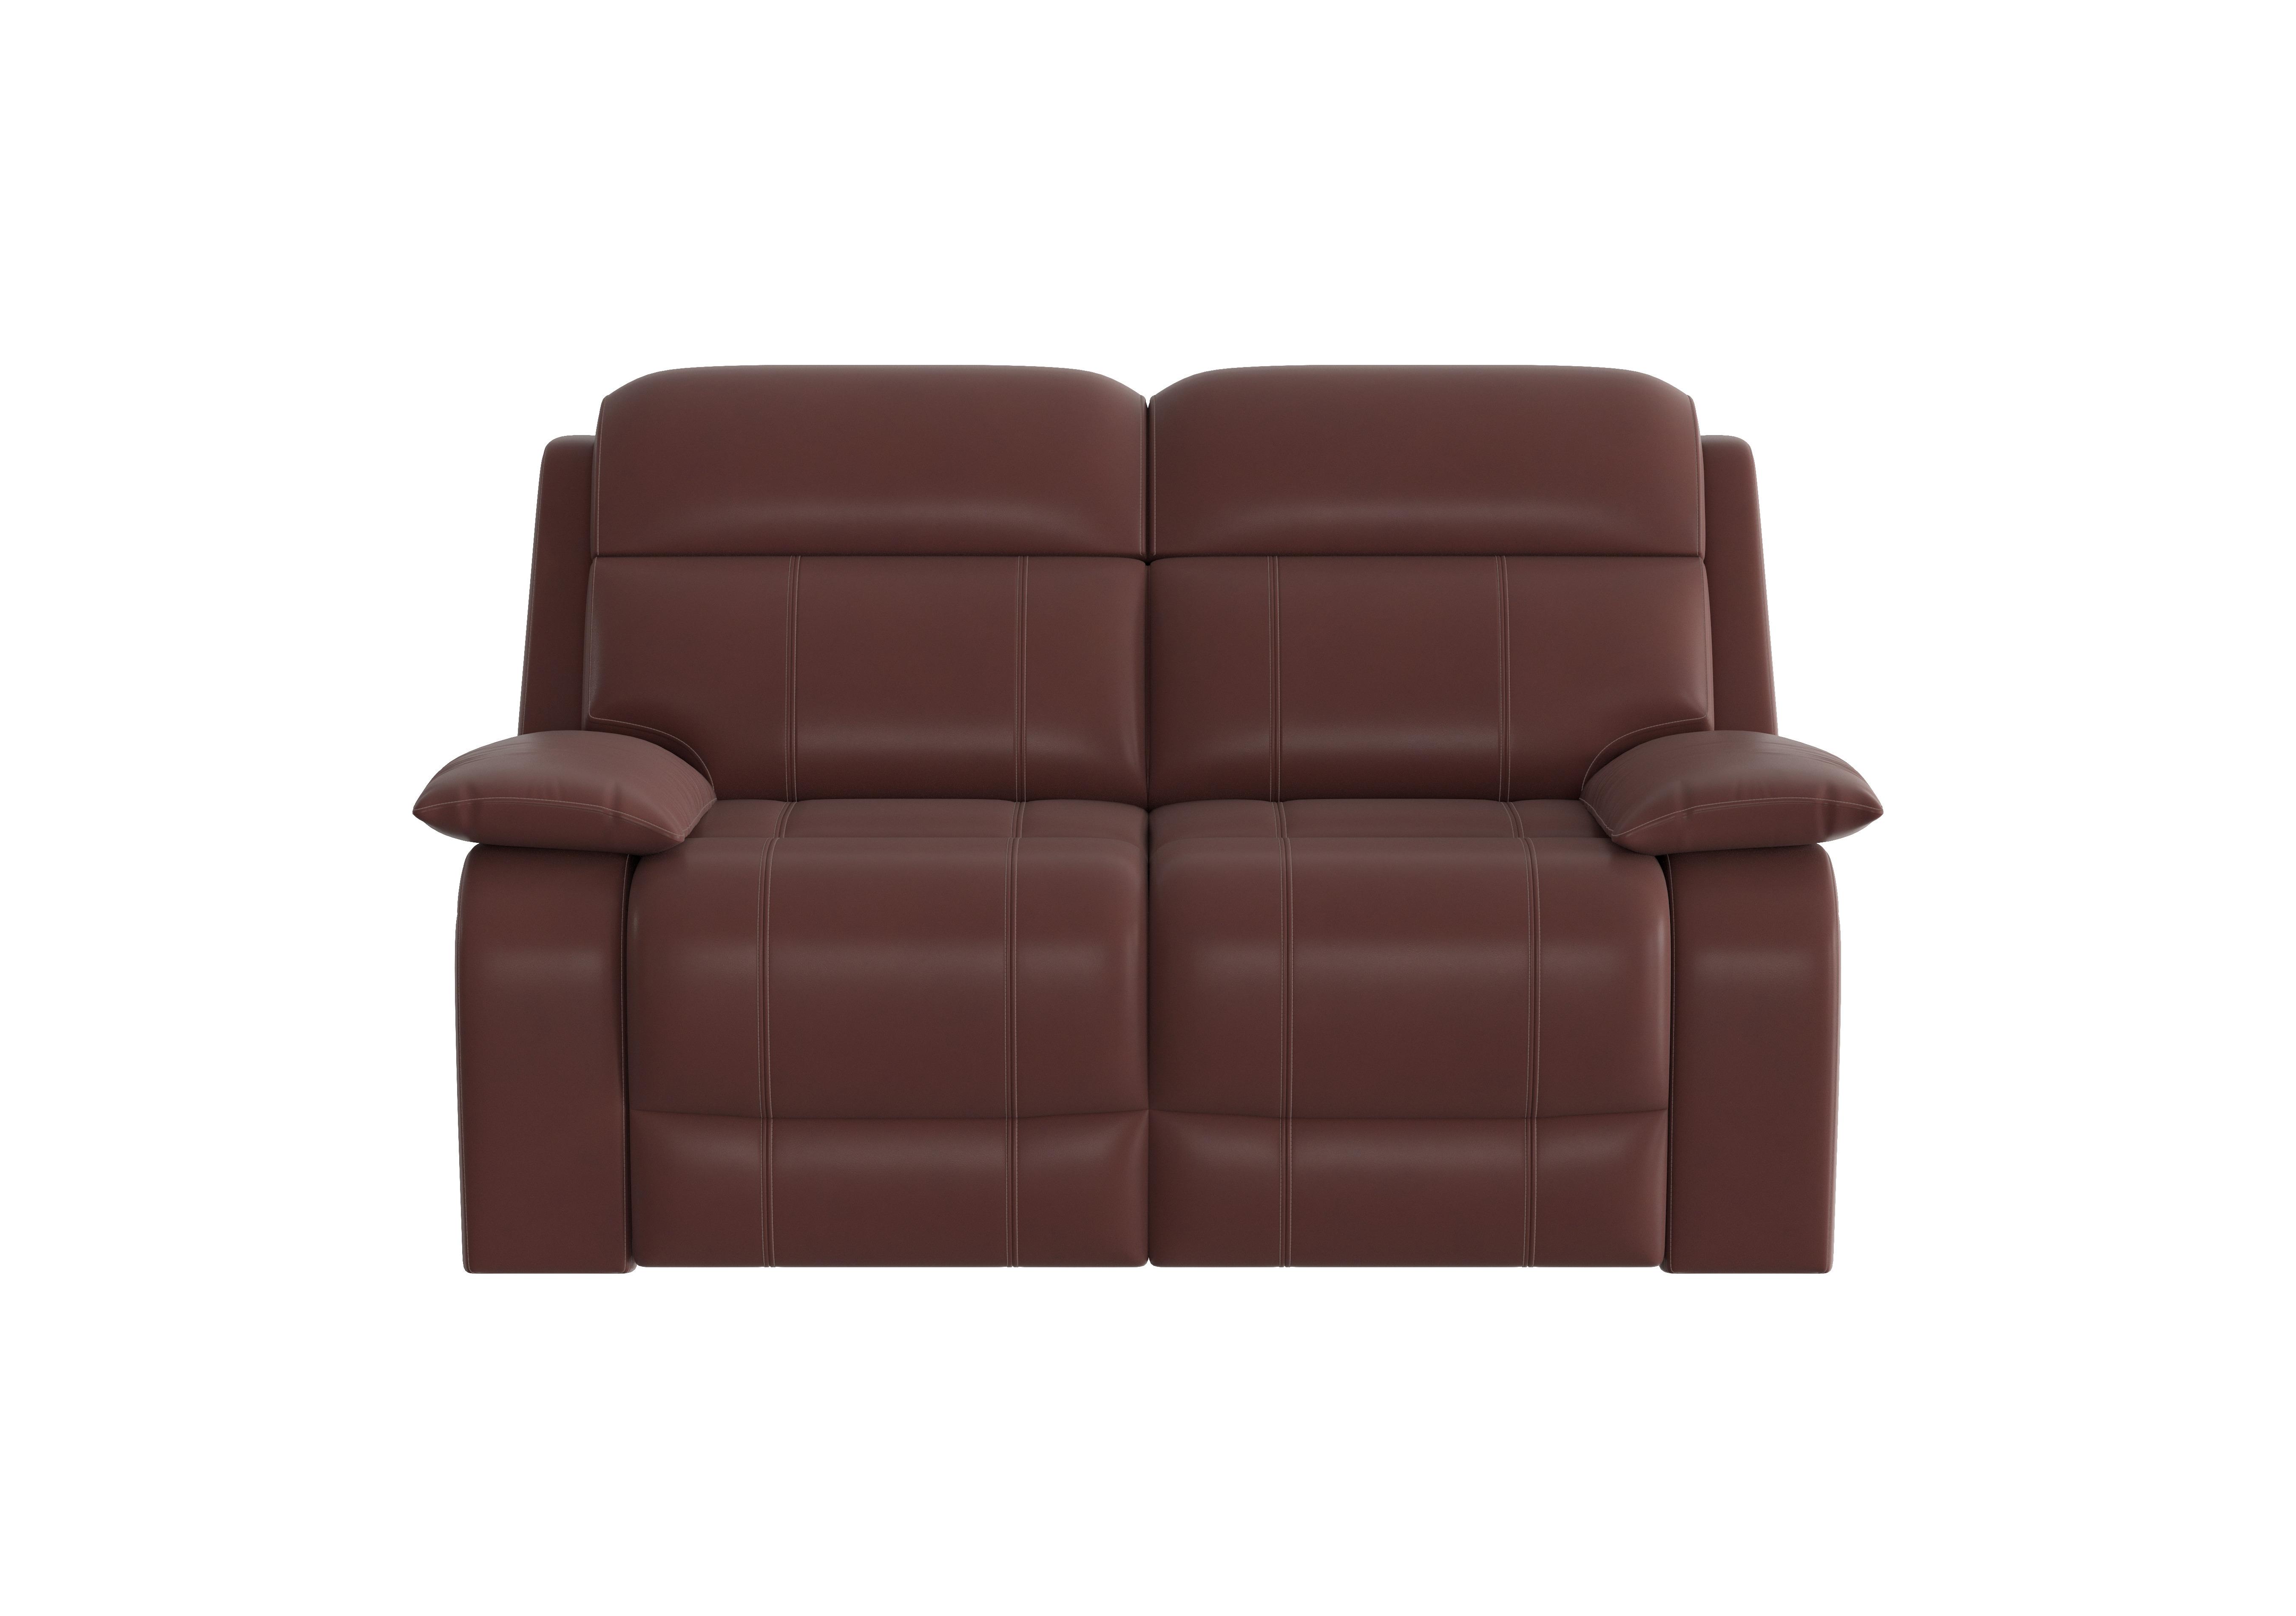 Moreno 2 Seater Leather Sofa in An-751b Burgundy on Furniture Village